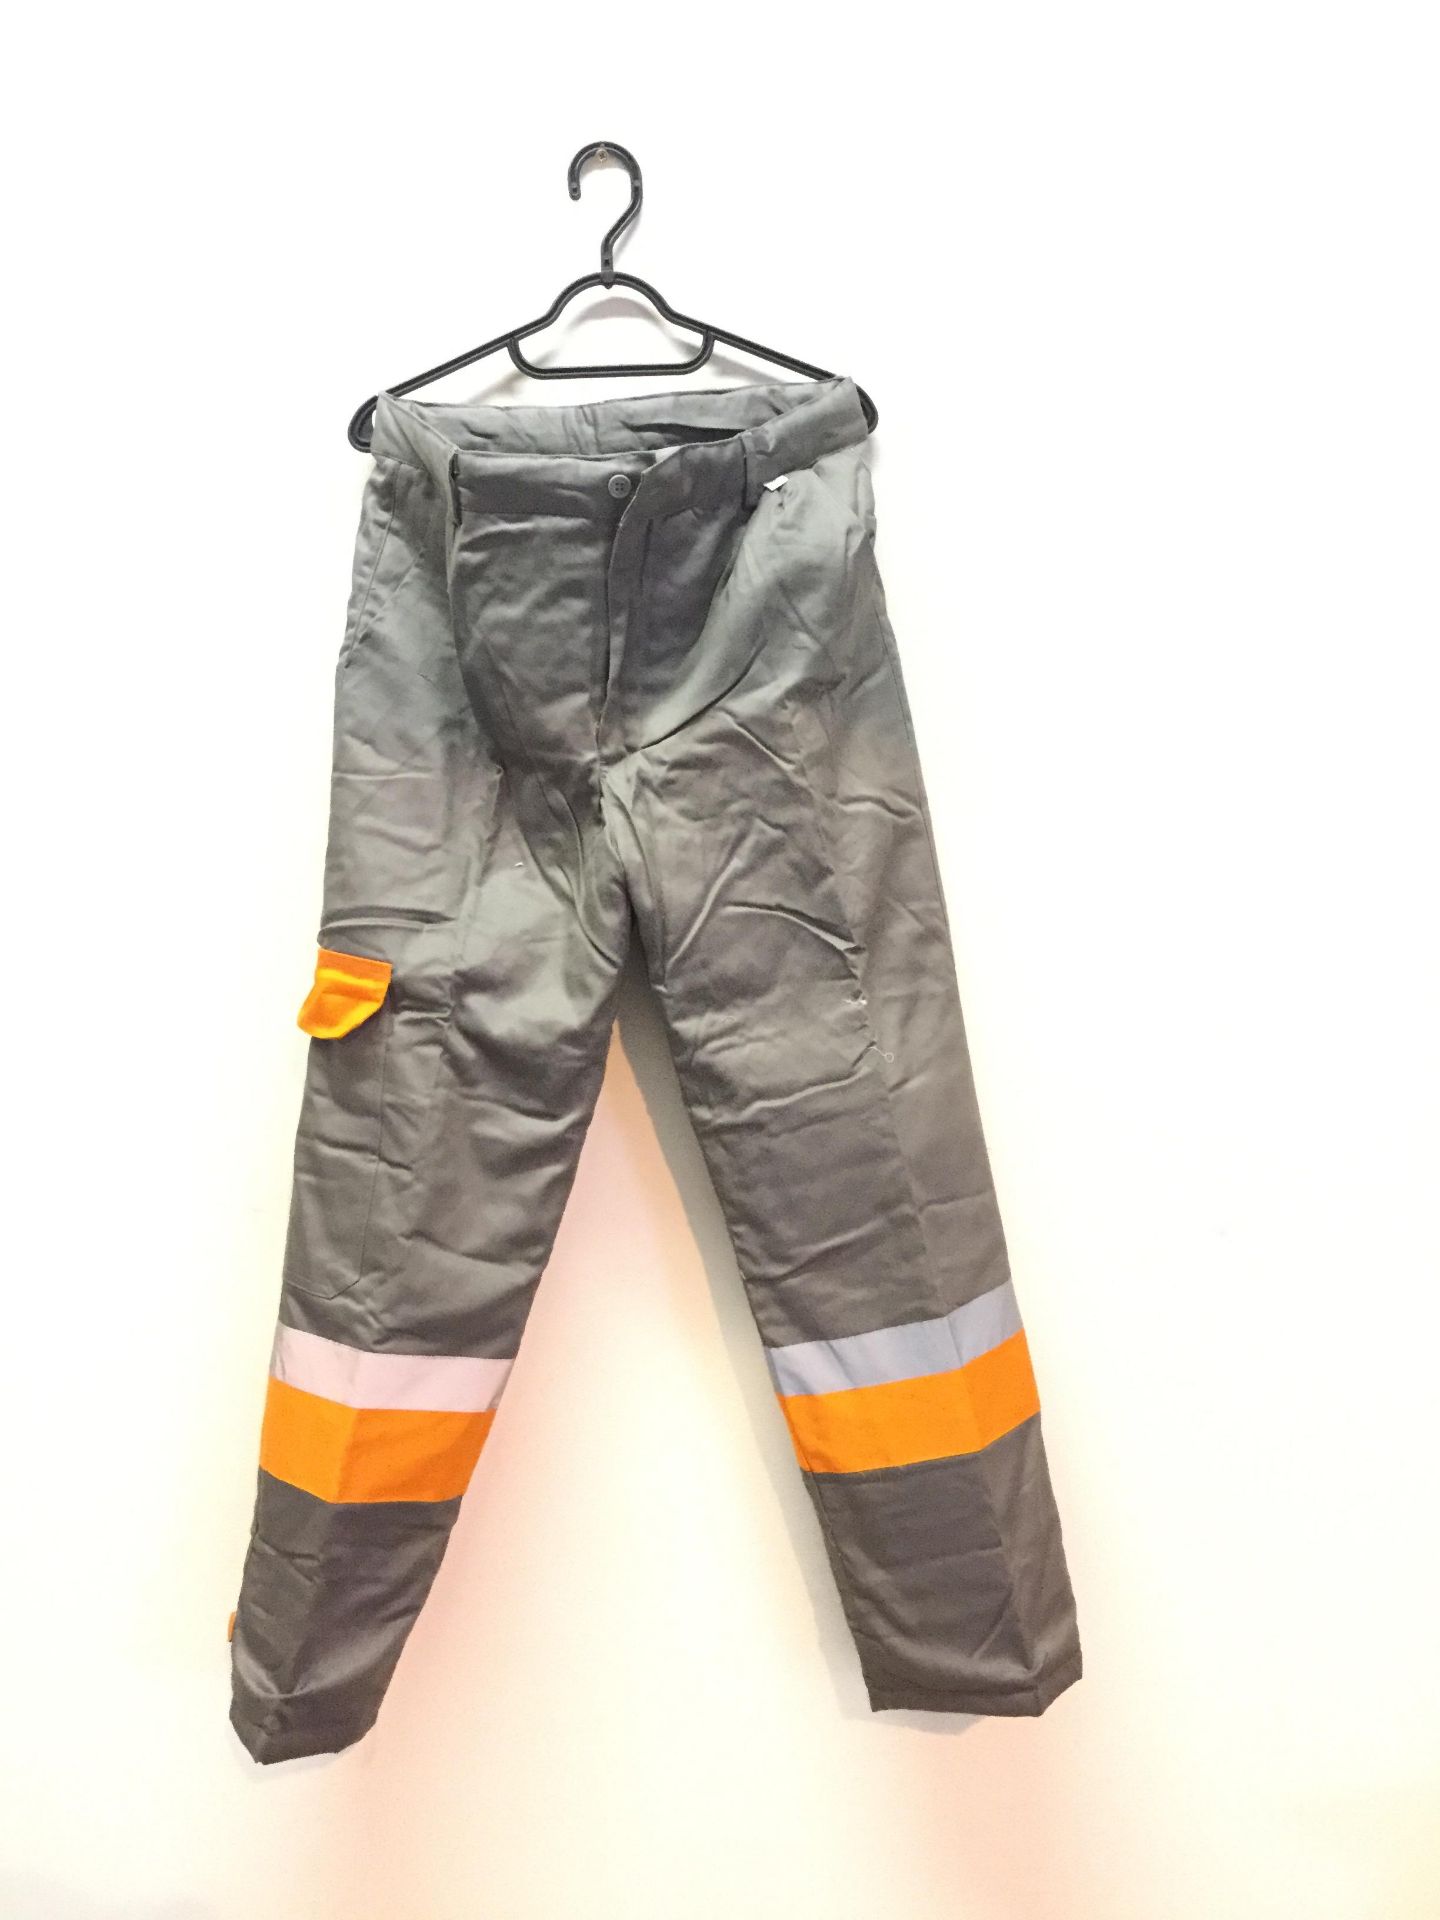 Flame Retardant Winter Trousers - Size 60